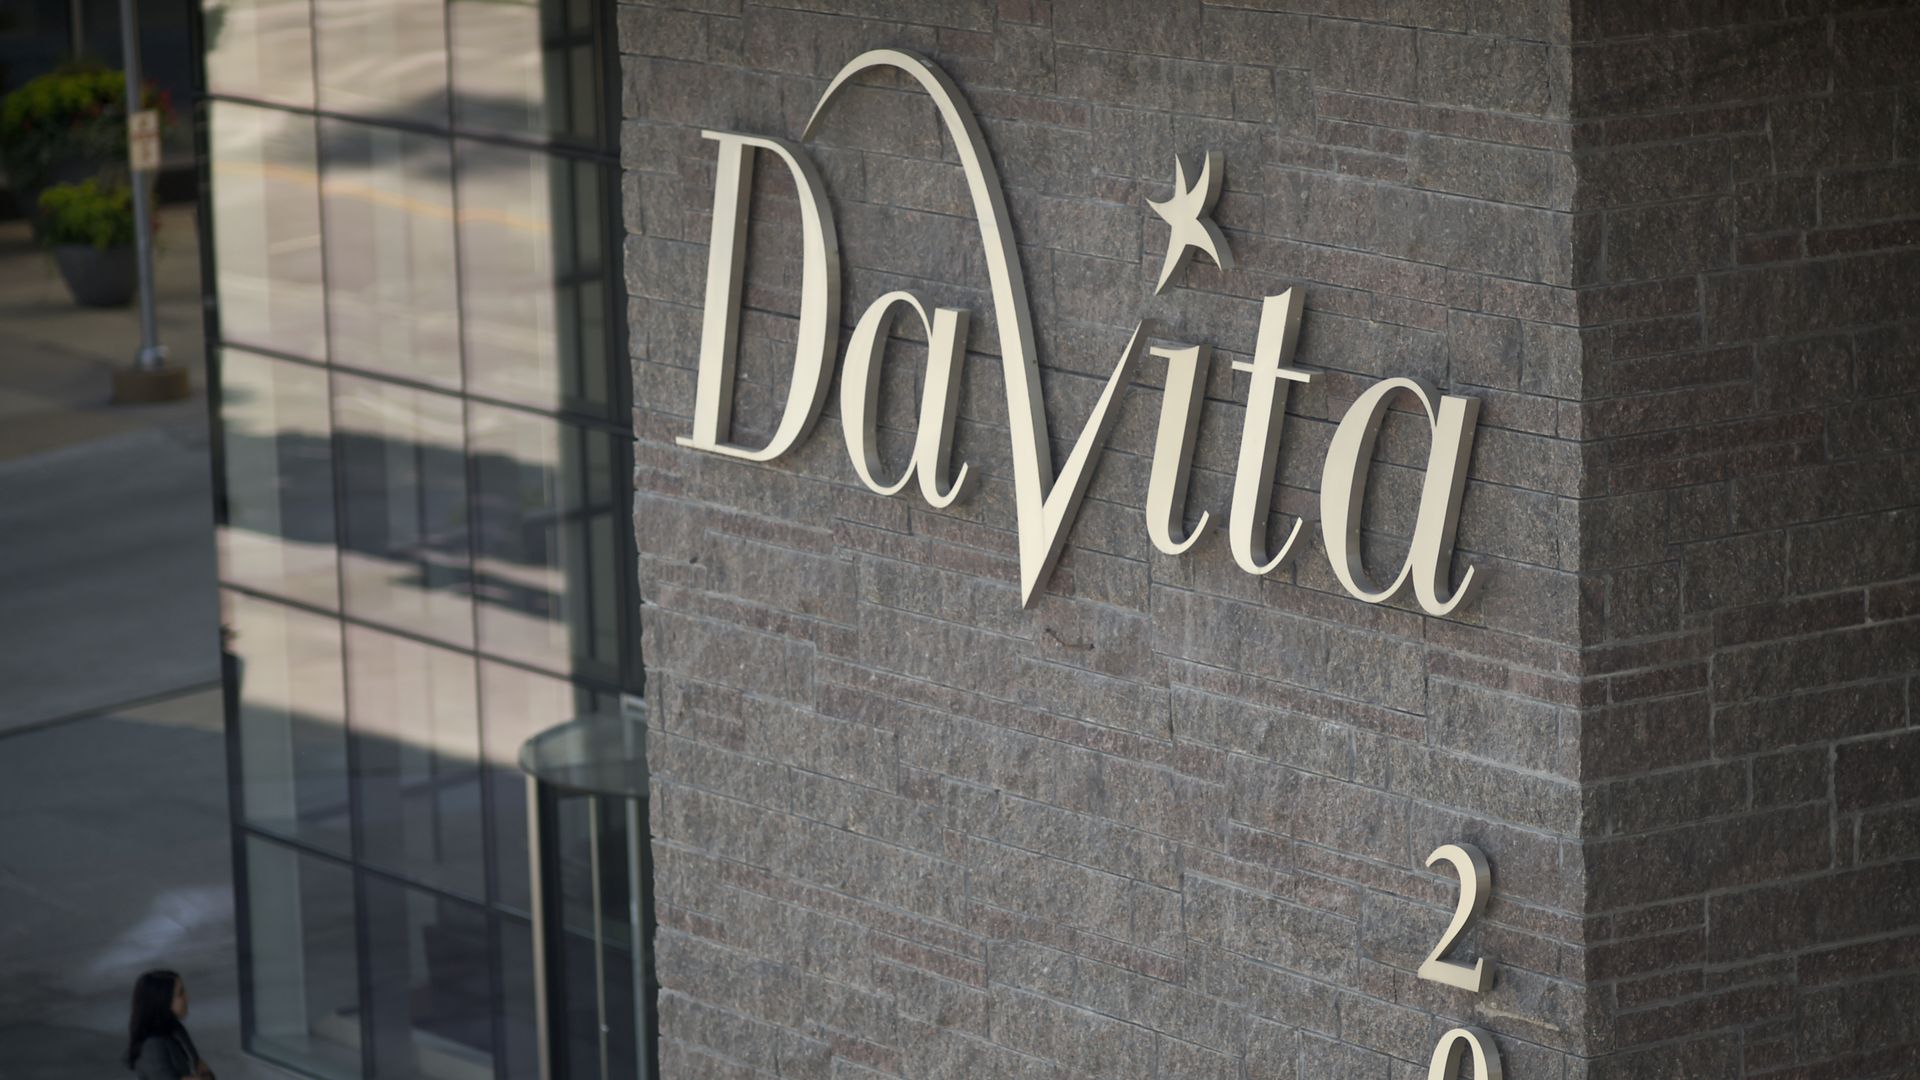 DaVita's headquarters building in Colorado.